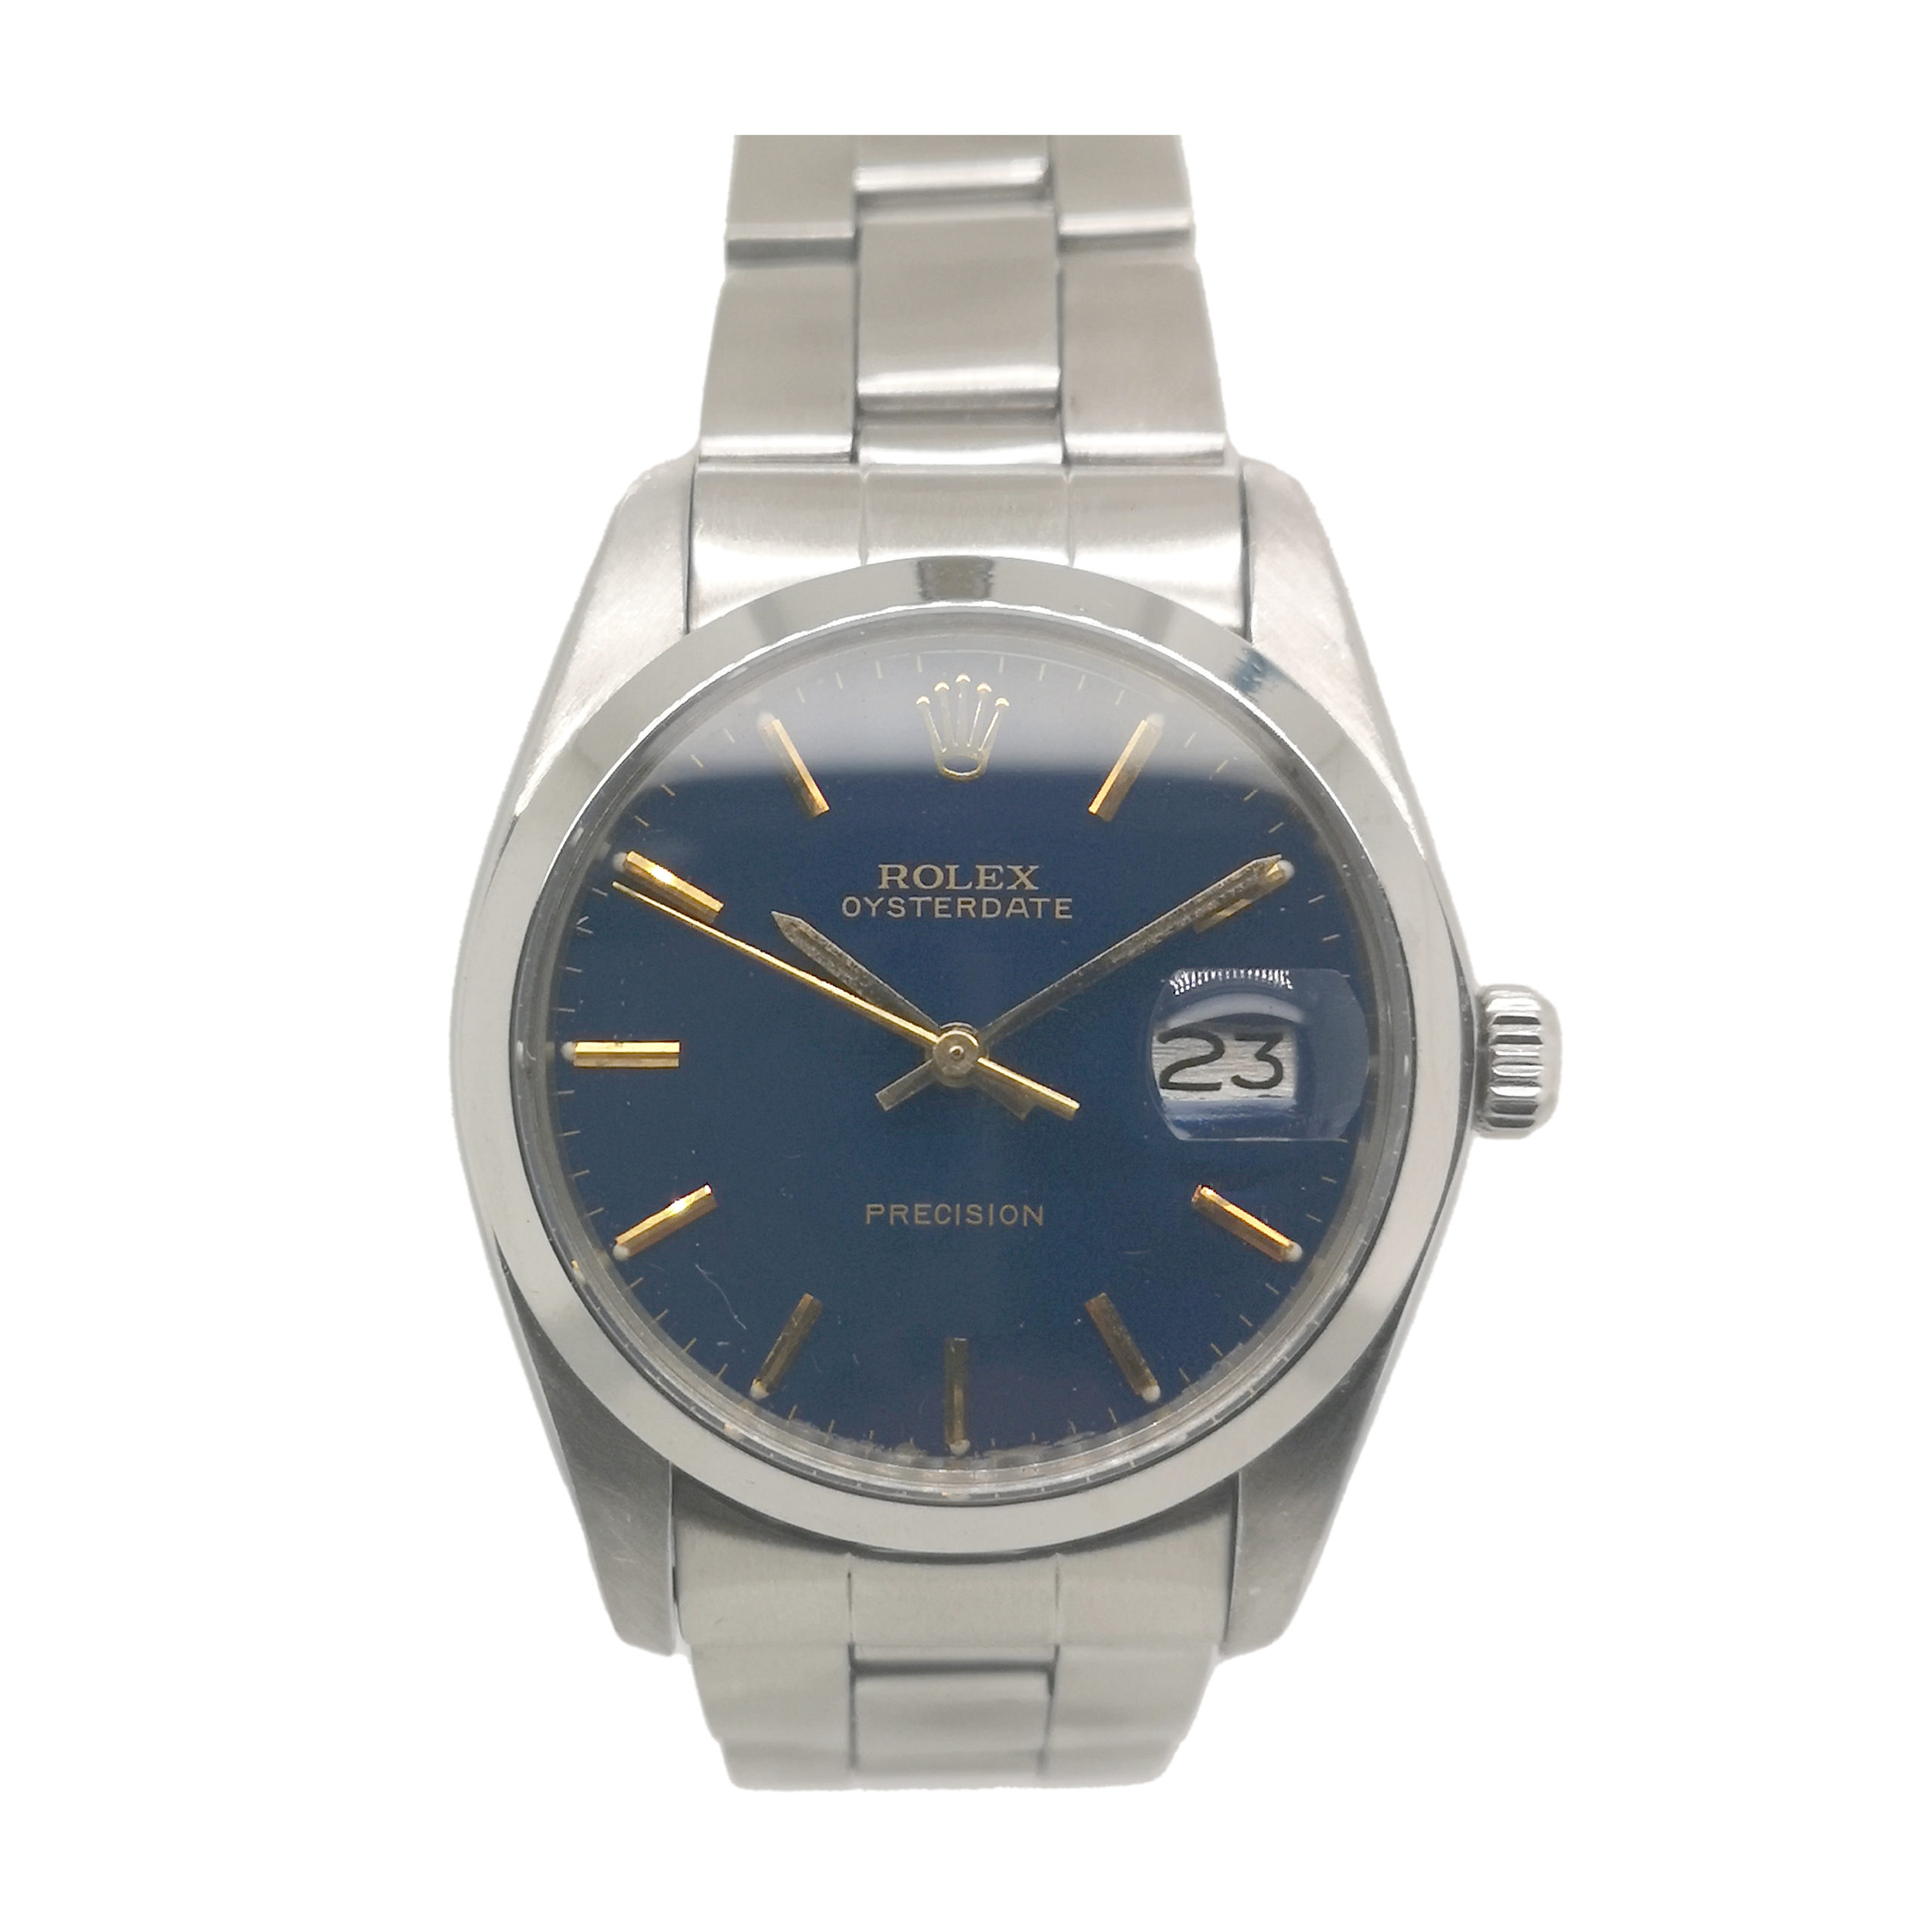 Rolex OysterDate Precision 6694 Watch